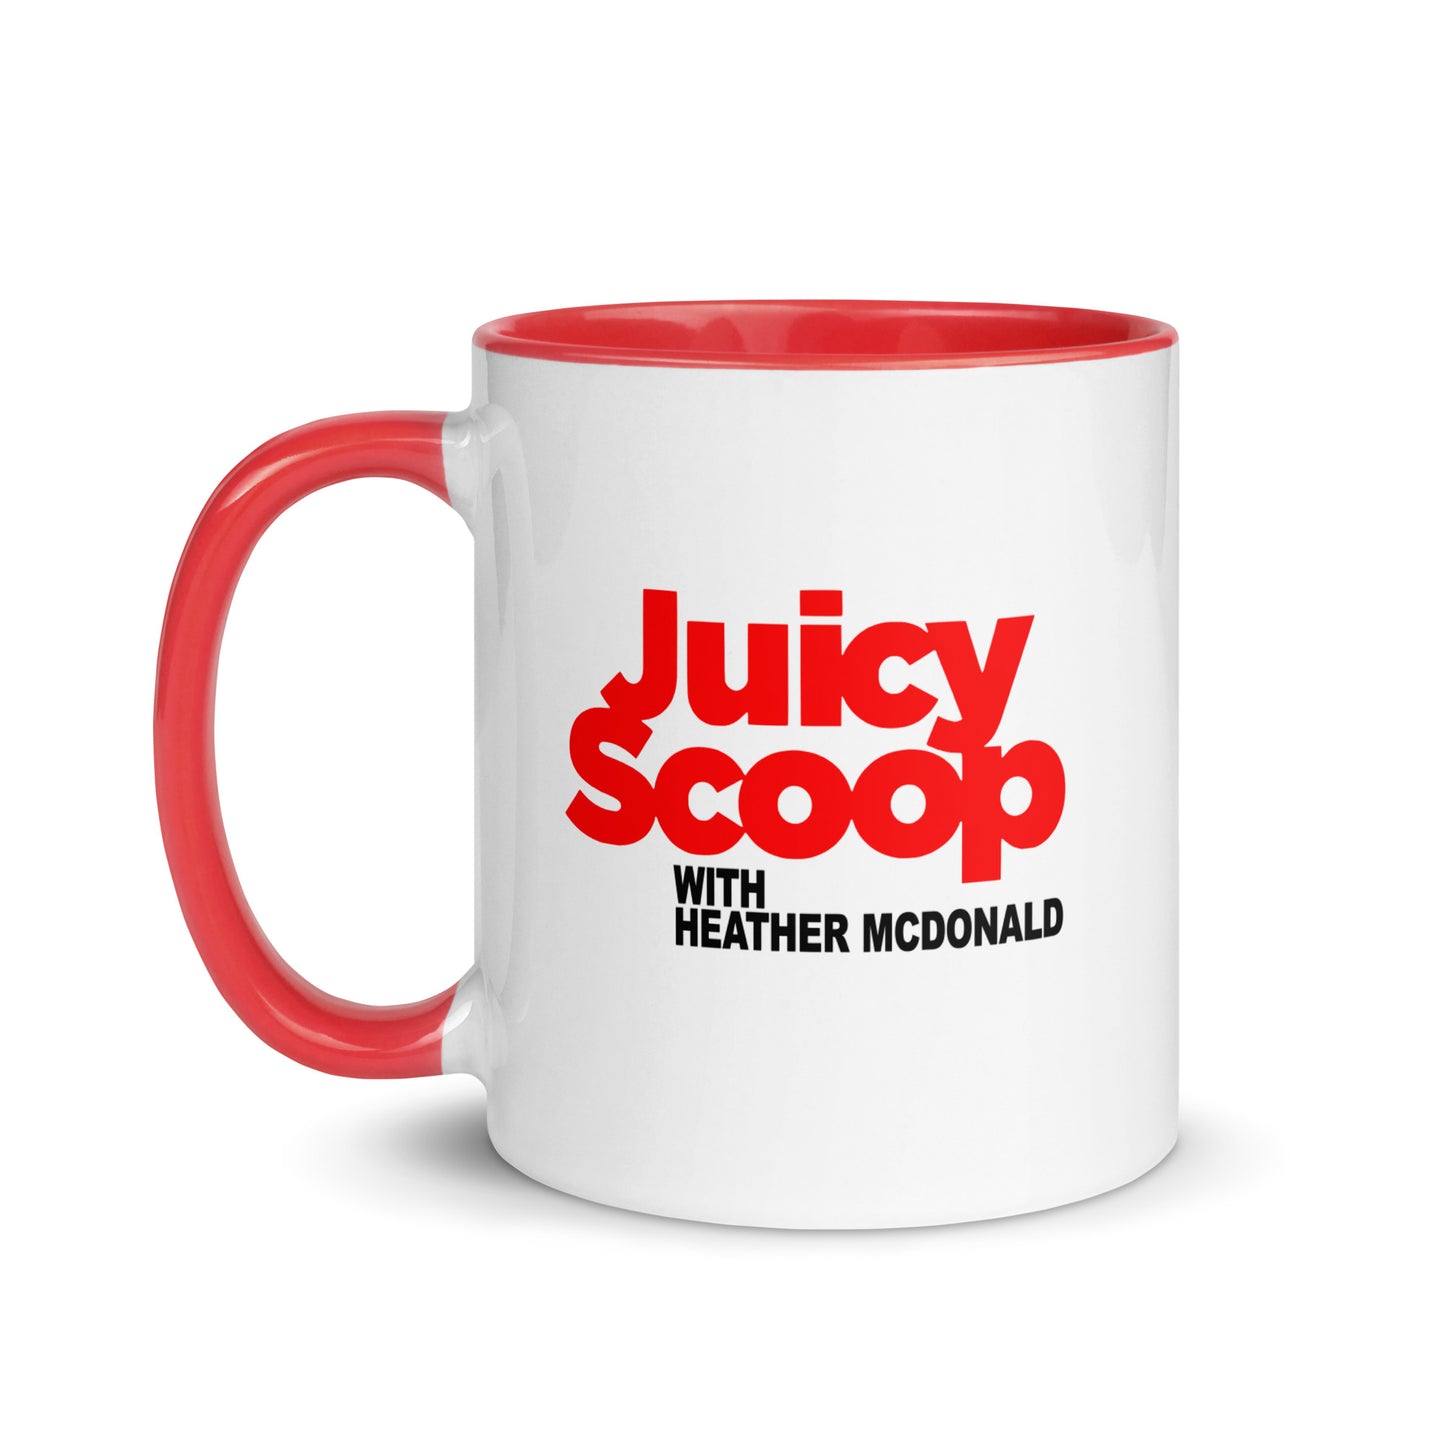 Juicy Scoop with Heather McDonald Coffee Mug